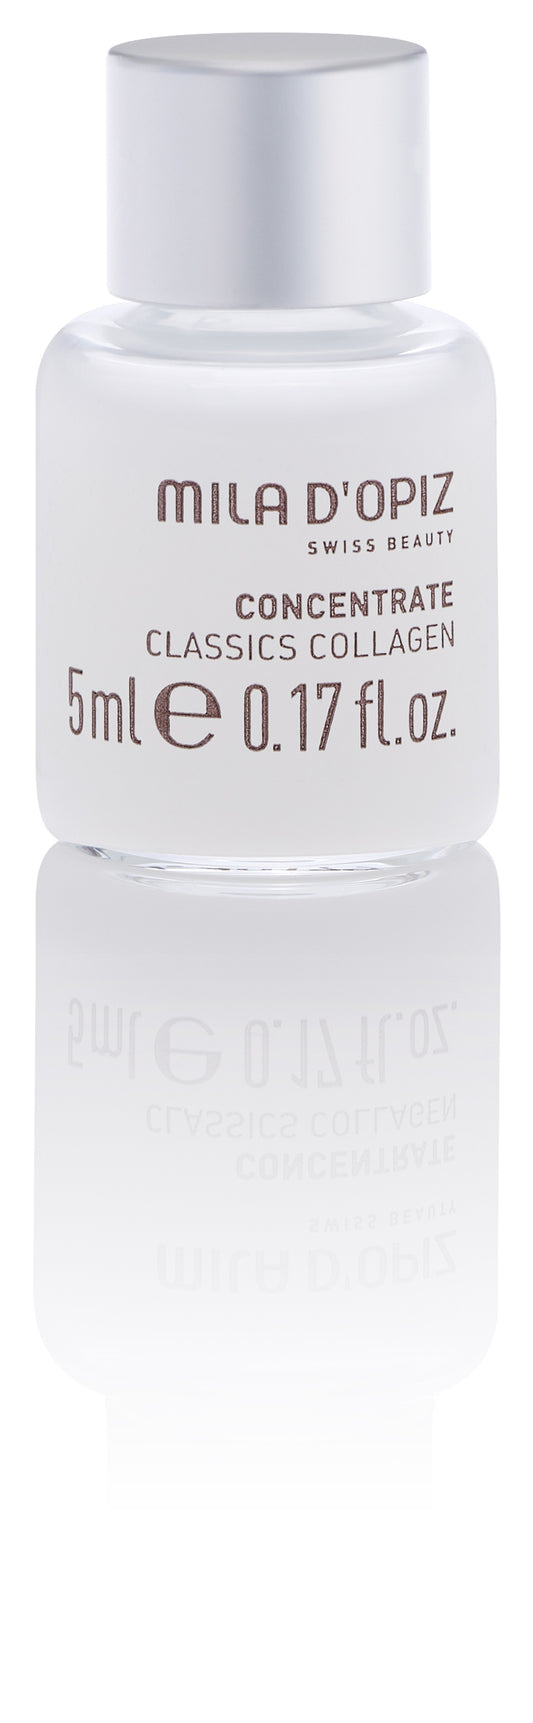 MILA D'OPIZ Classics Collagen Concentrate 5ml